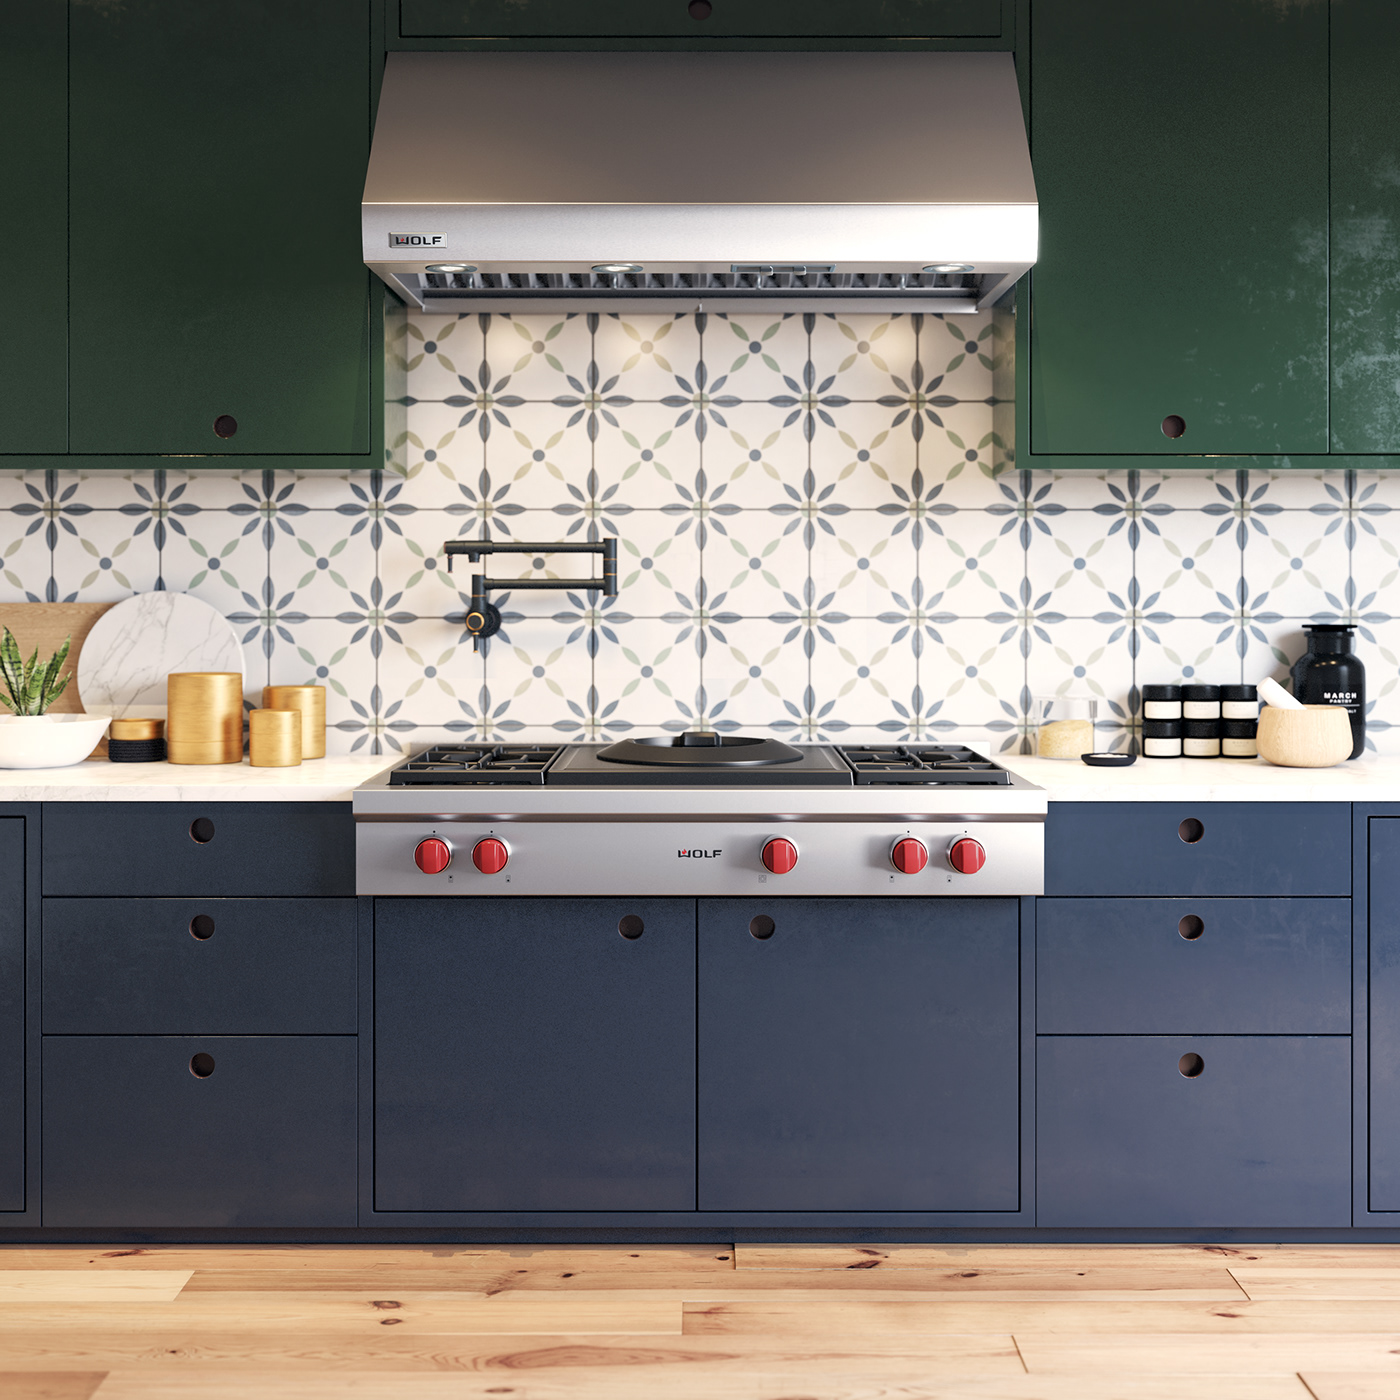 interior design  3ds max photoshop architecture creative product design  kitchen design home appliances